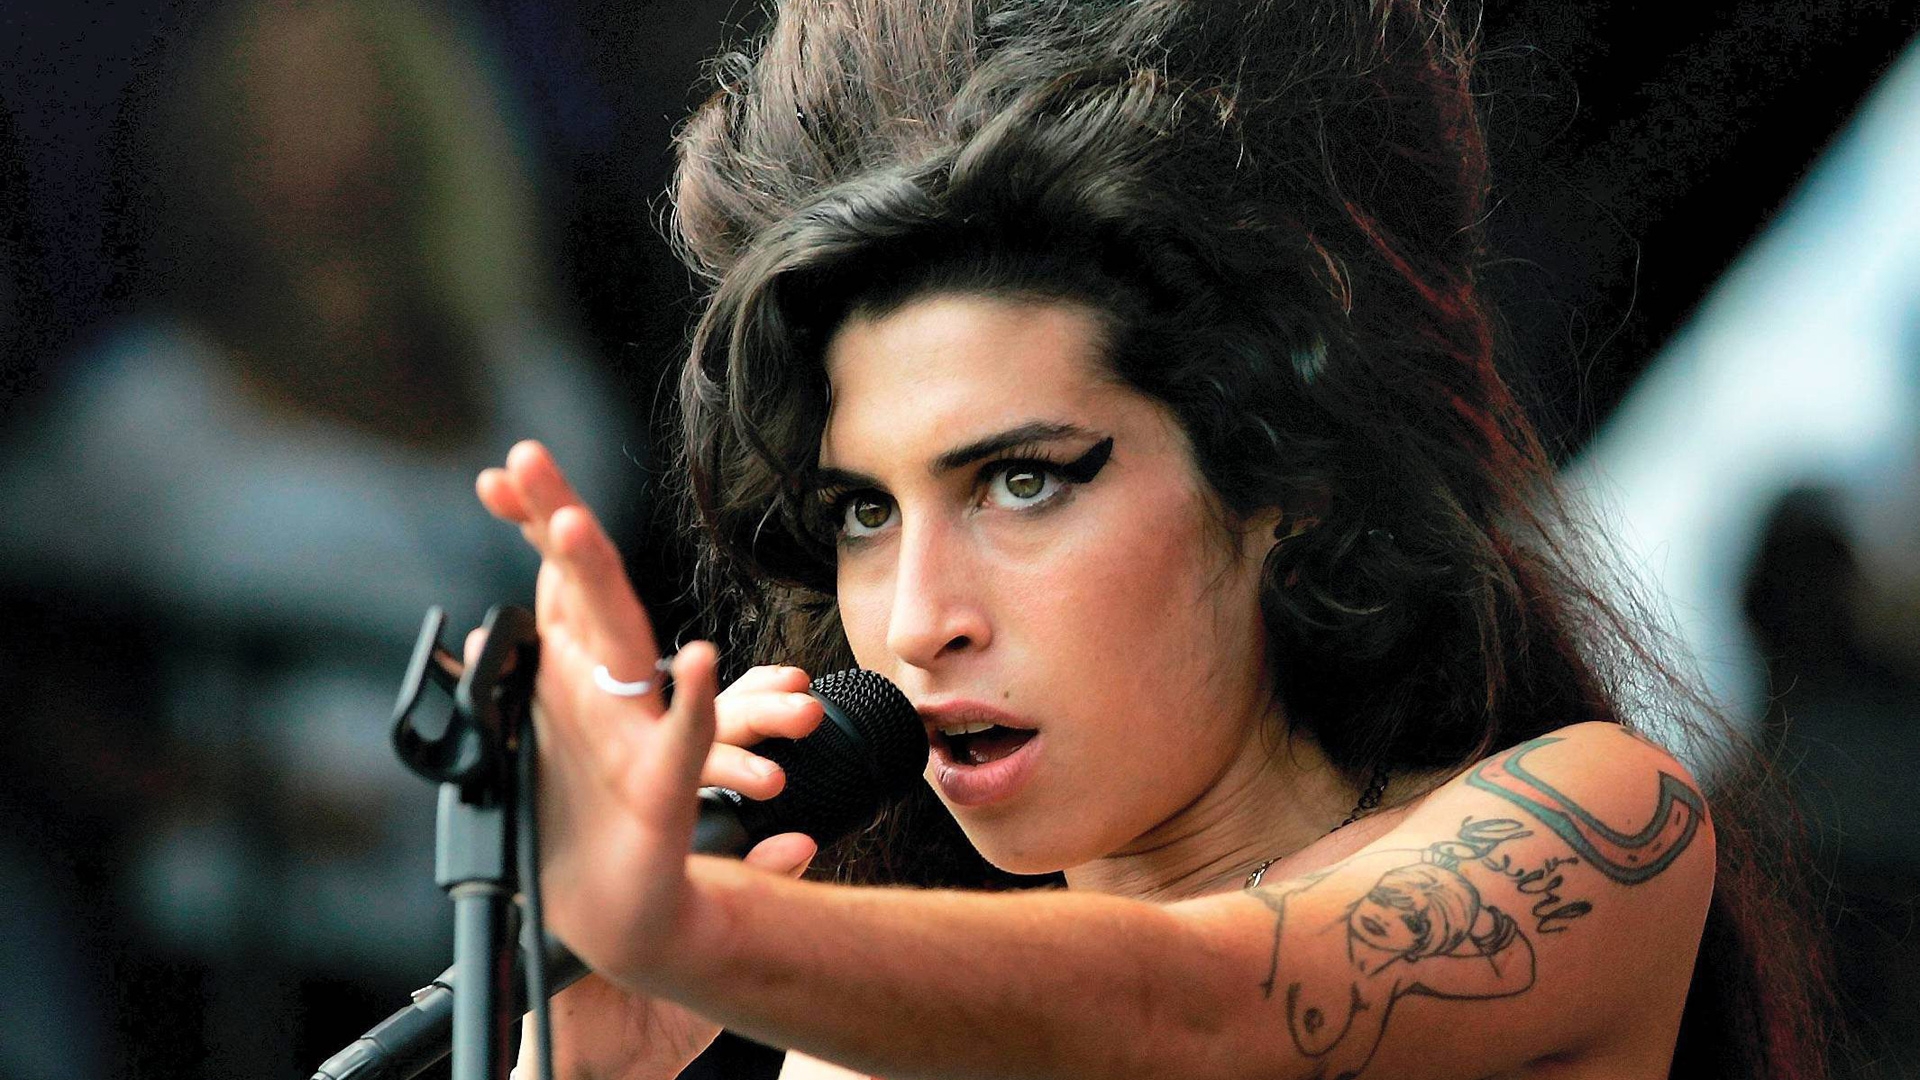 Vandaag (14 september) in 1983 wordt Amy Winehouse (1983-2011) geboren